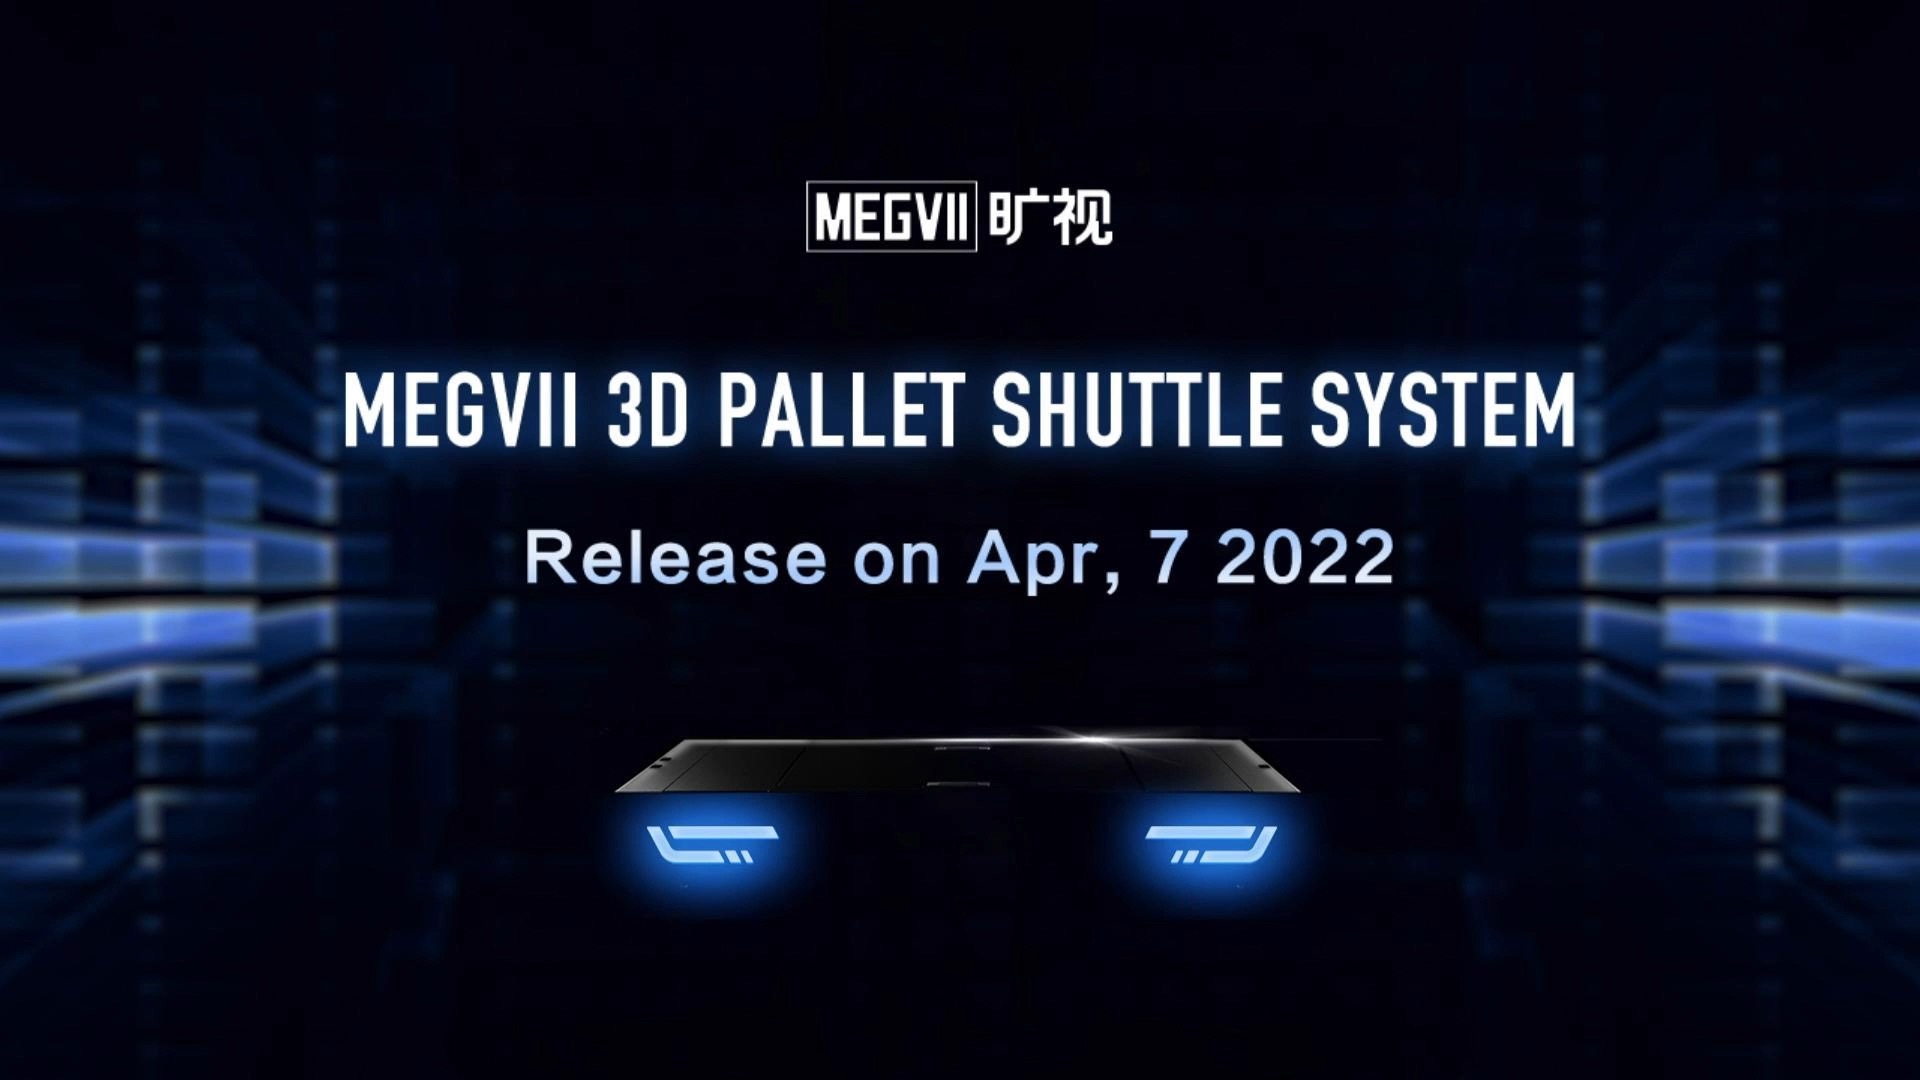 MEGVIIスマートパレットシャトルシステムの新製品発表会は近日オーペン